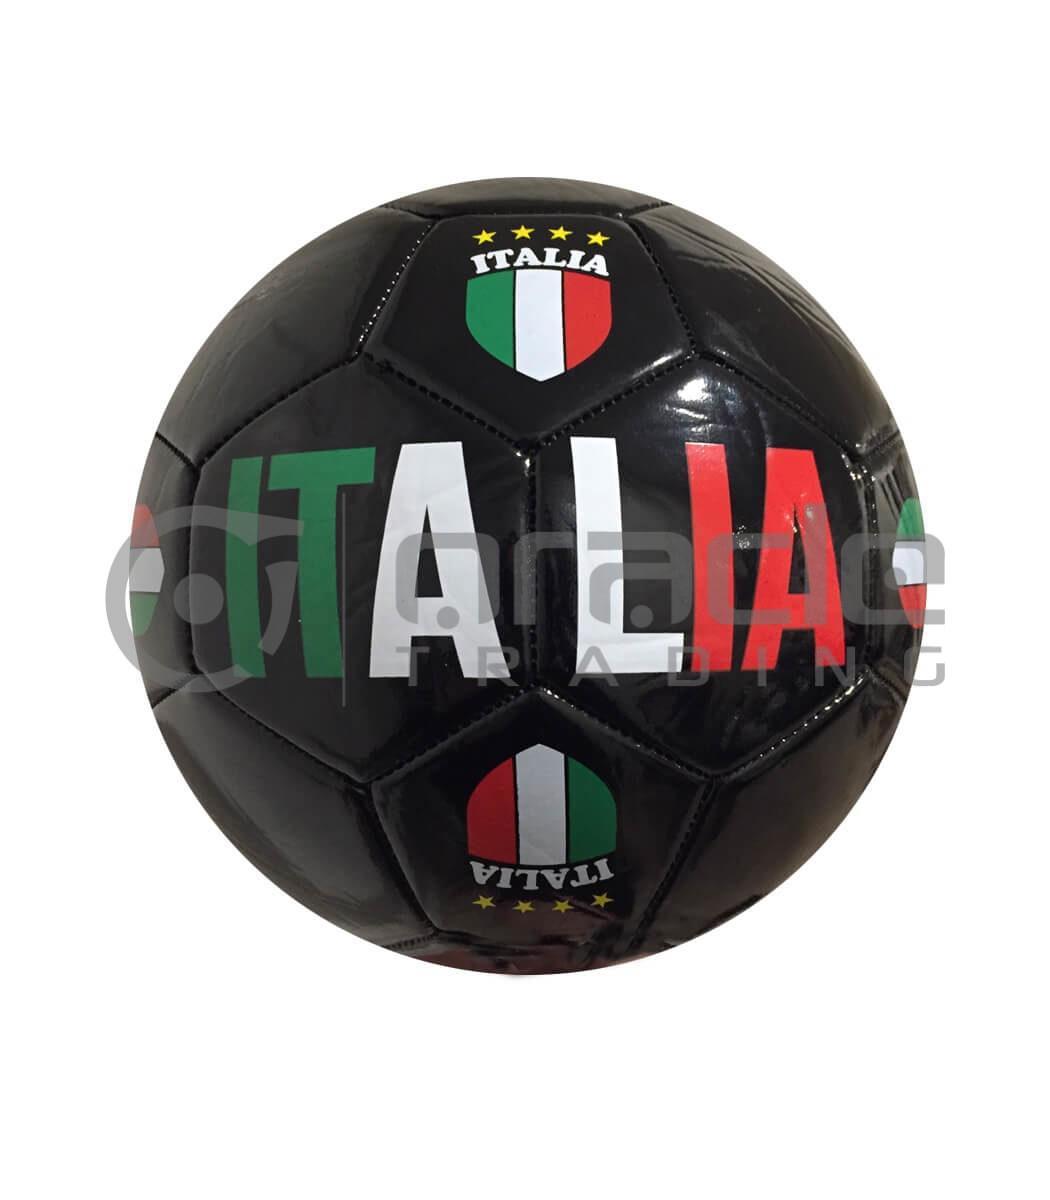 Italia Large Soccer Ball - Black